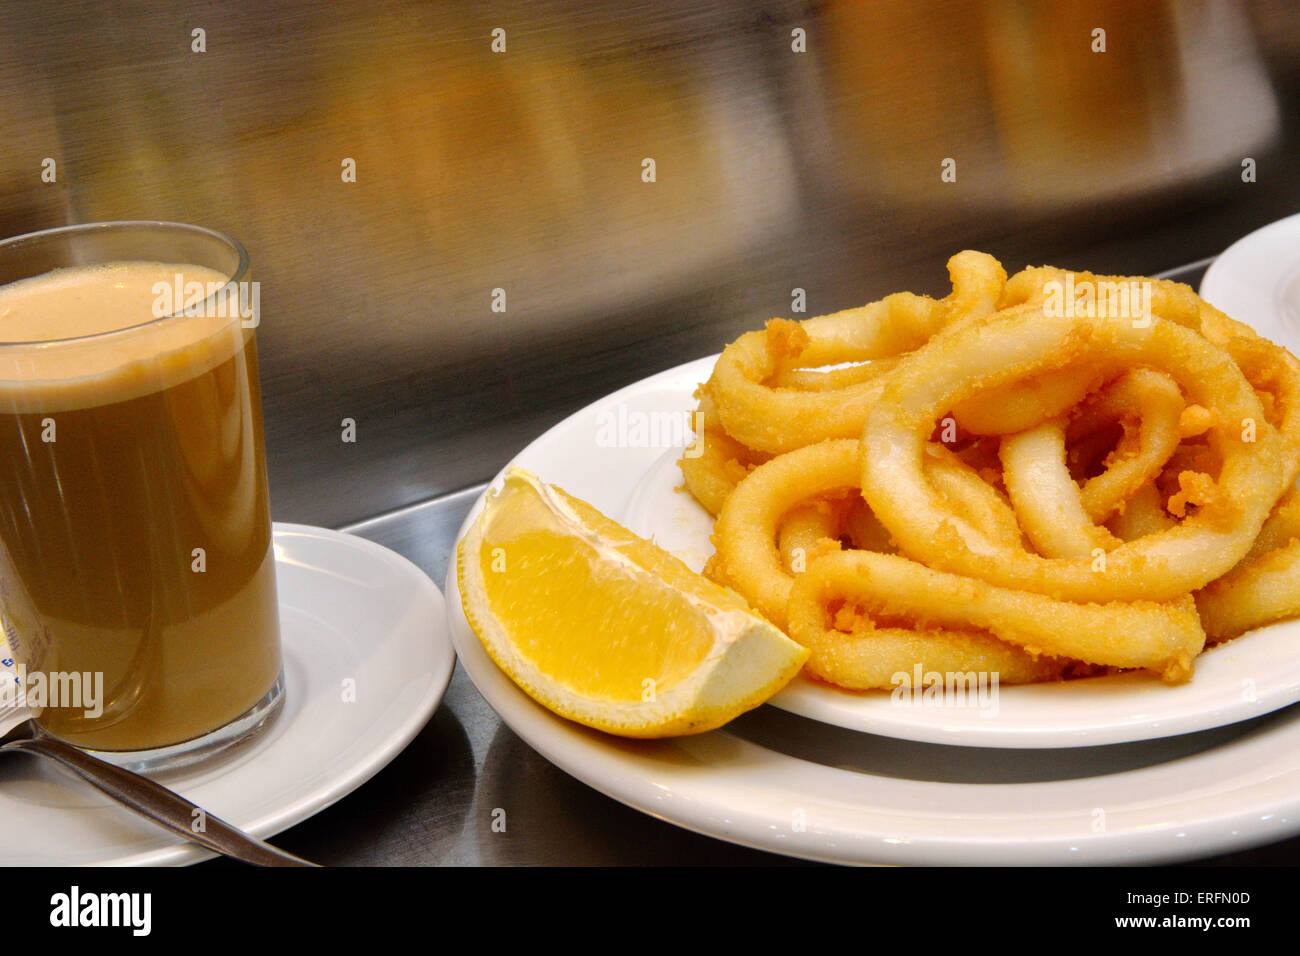 Plate of calamari with lemon and glass of coffee, Spain Stock Photo